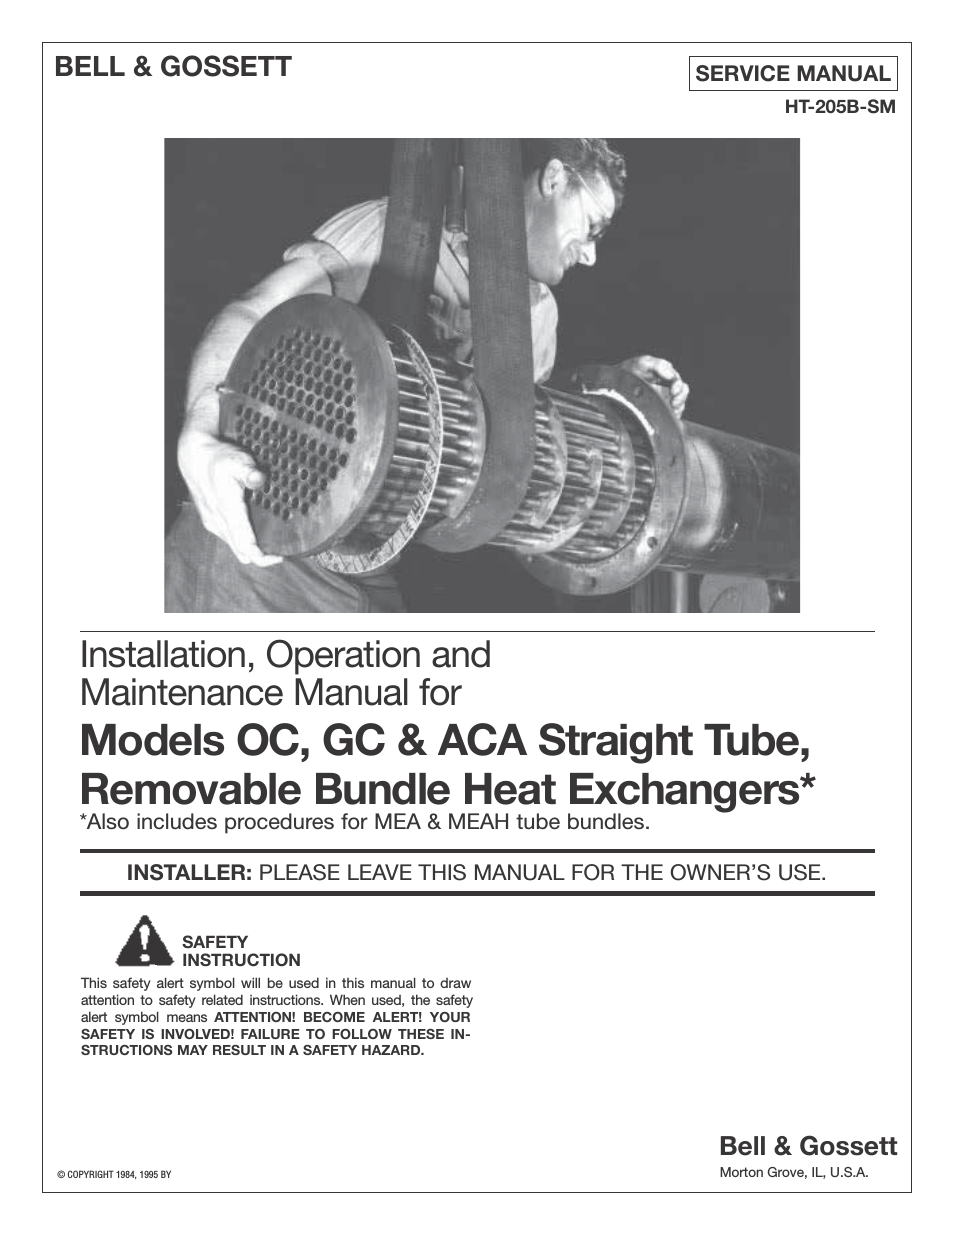 HT 205B SM Models OC Straight Tube, Removable Bundle Heat Exchangers